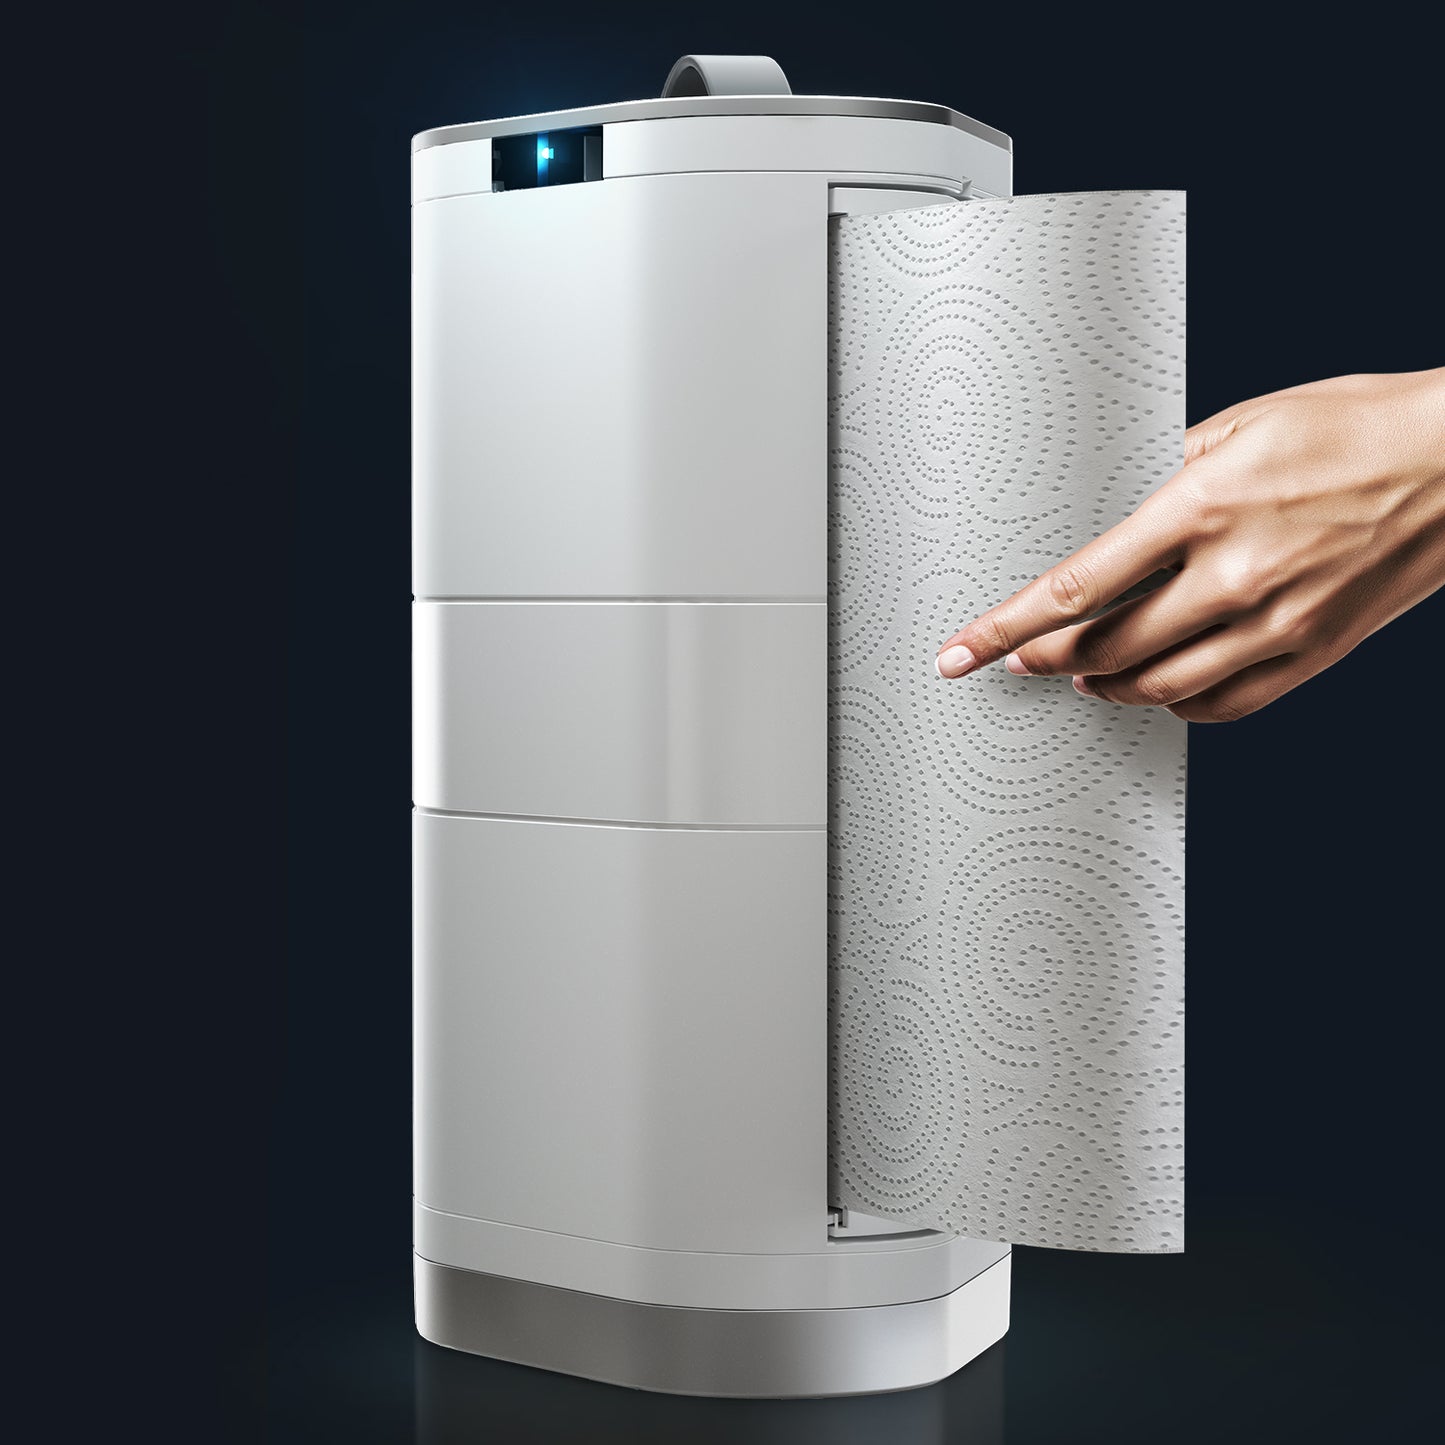 Innovia Automatic Paper Towel Dispenser, Silver, New in Box for